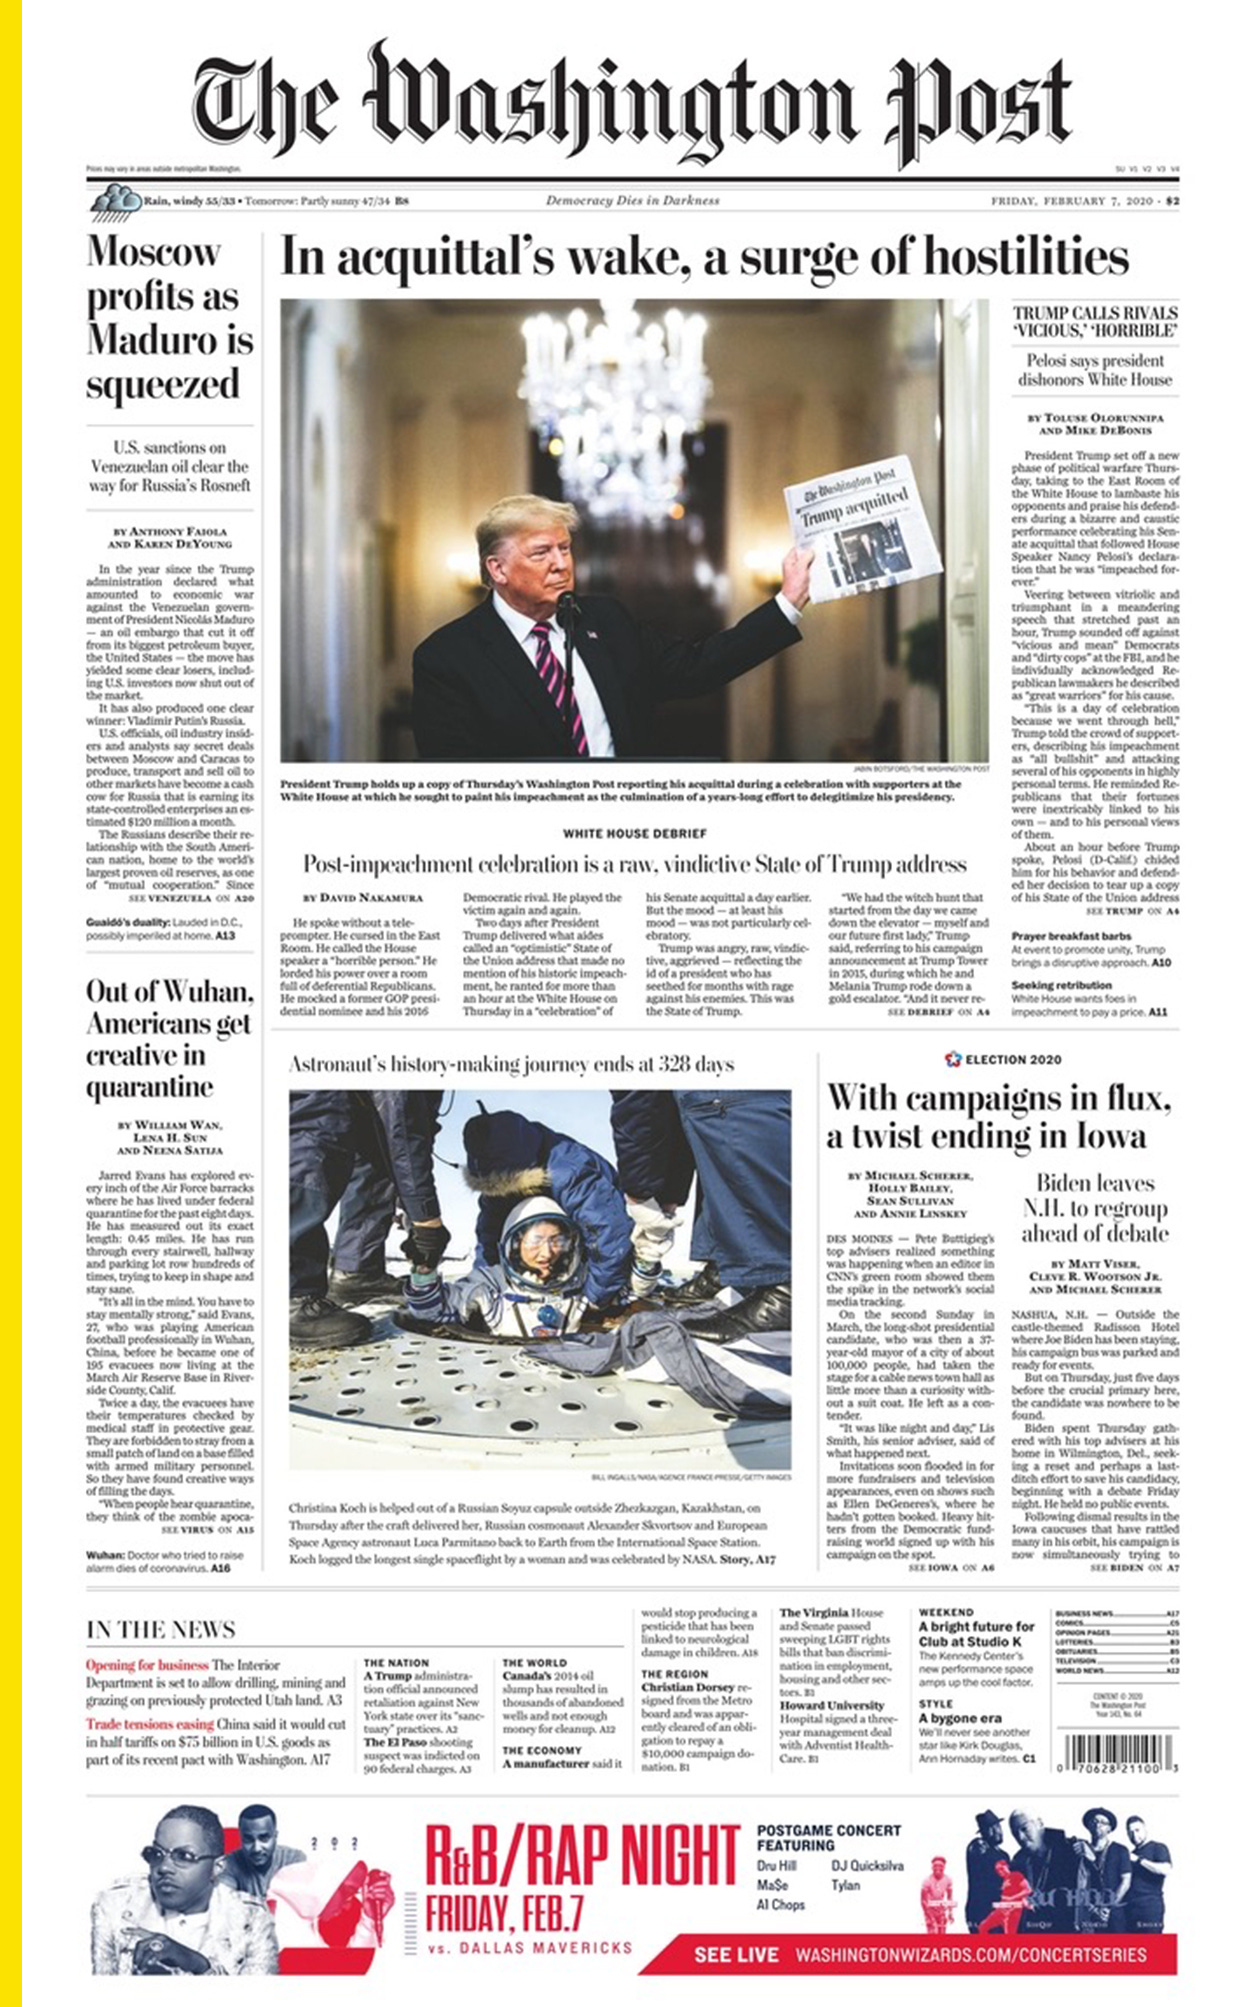 Washington Post - The front page of Wednesday's Washington